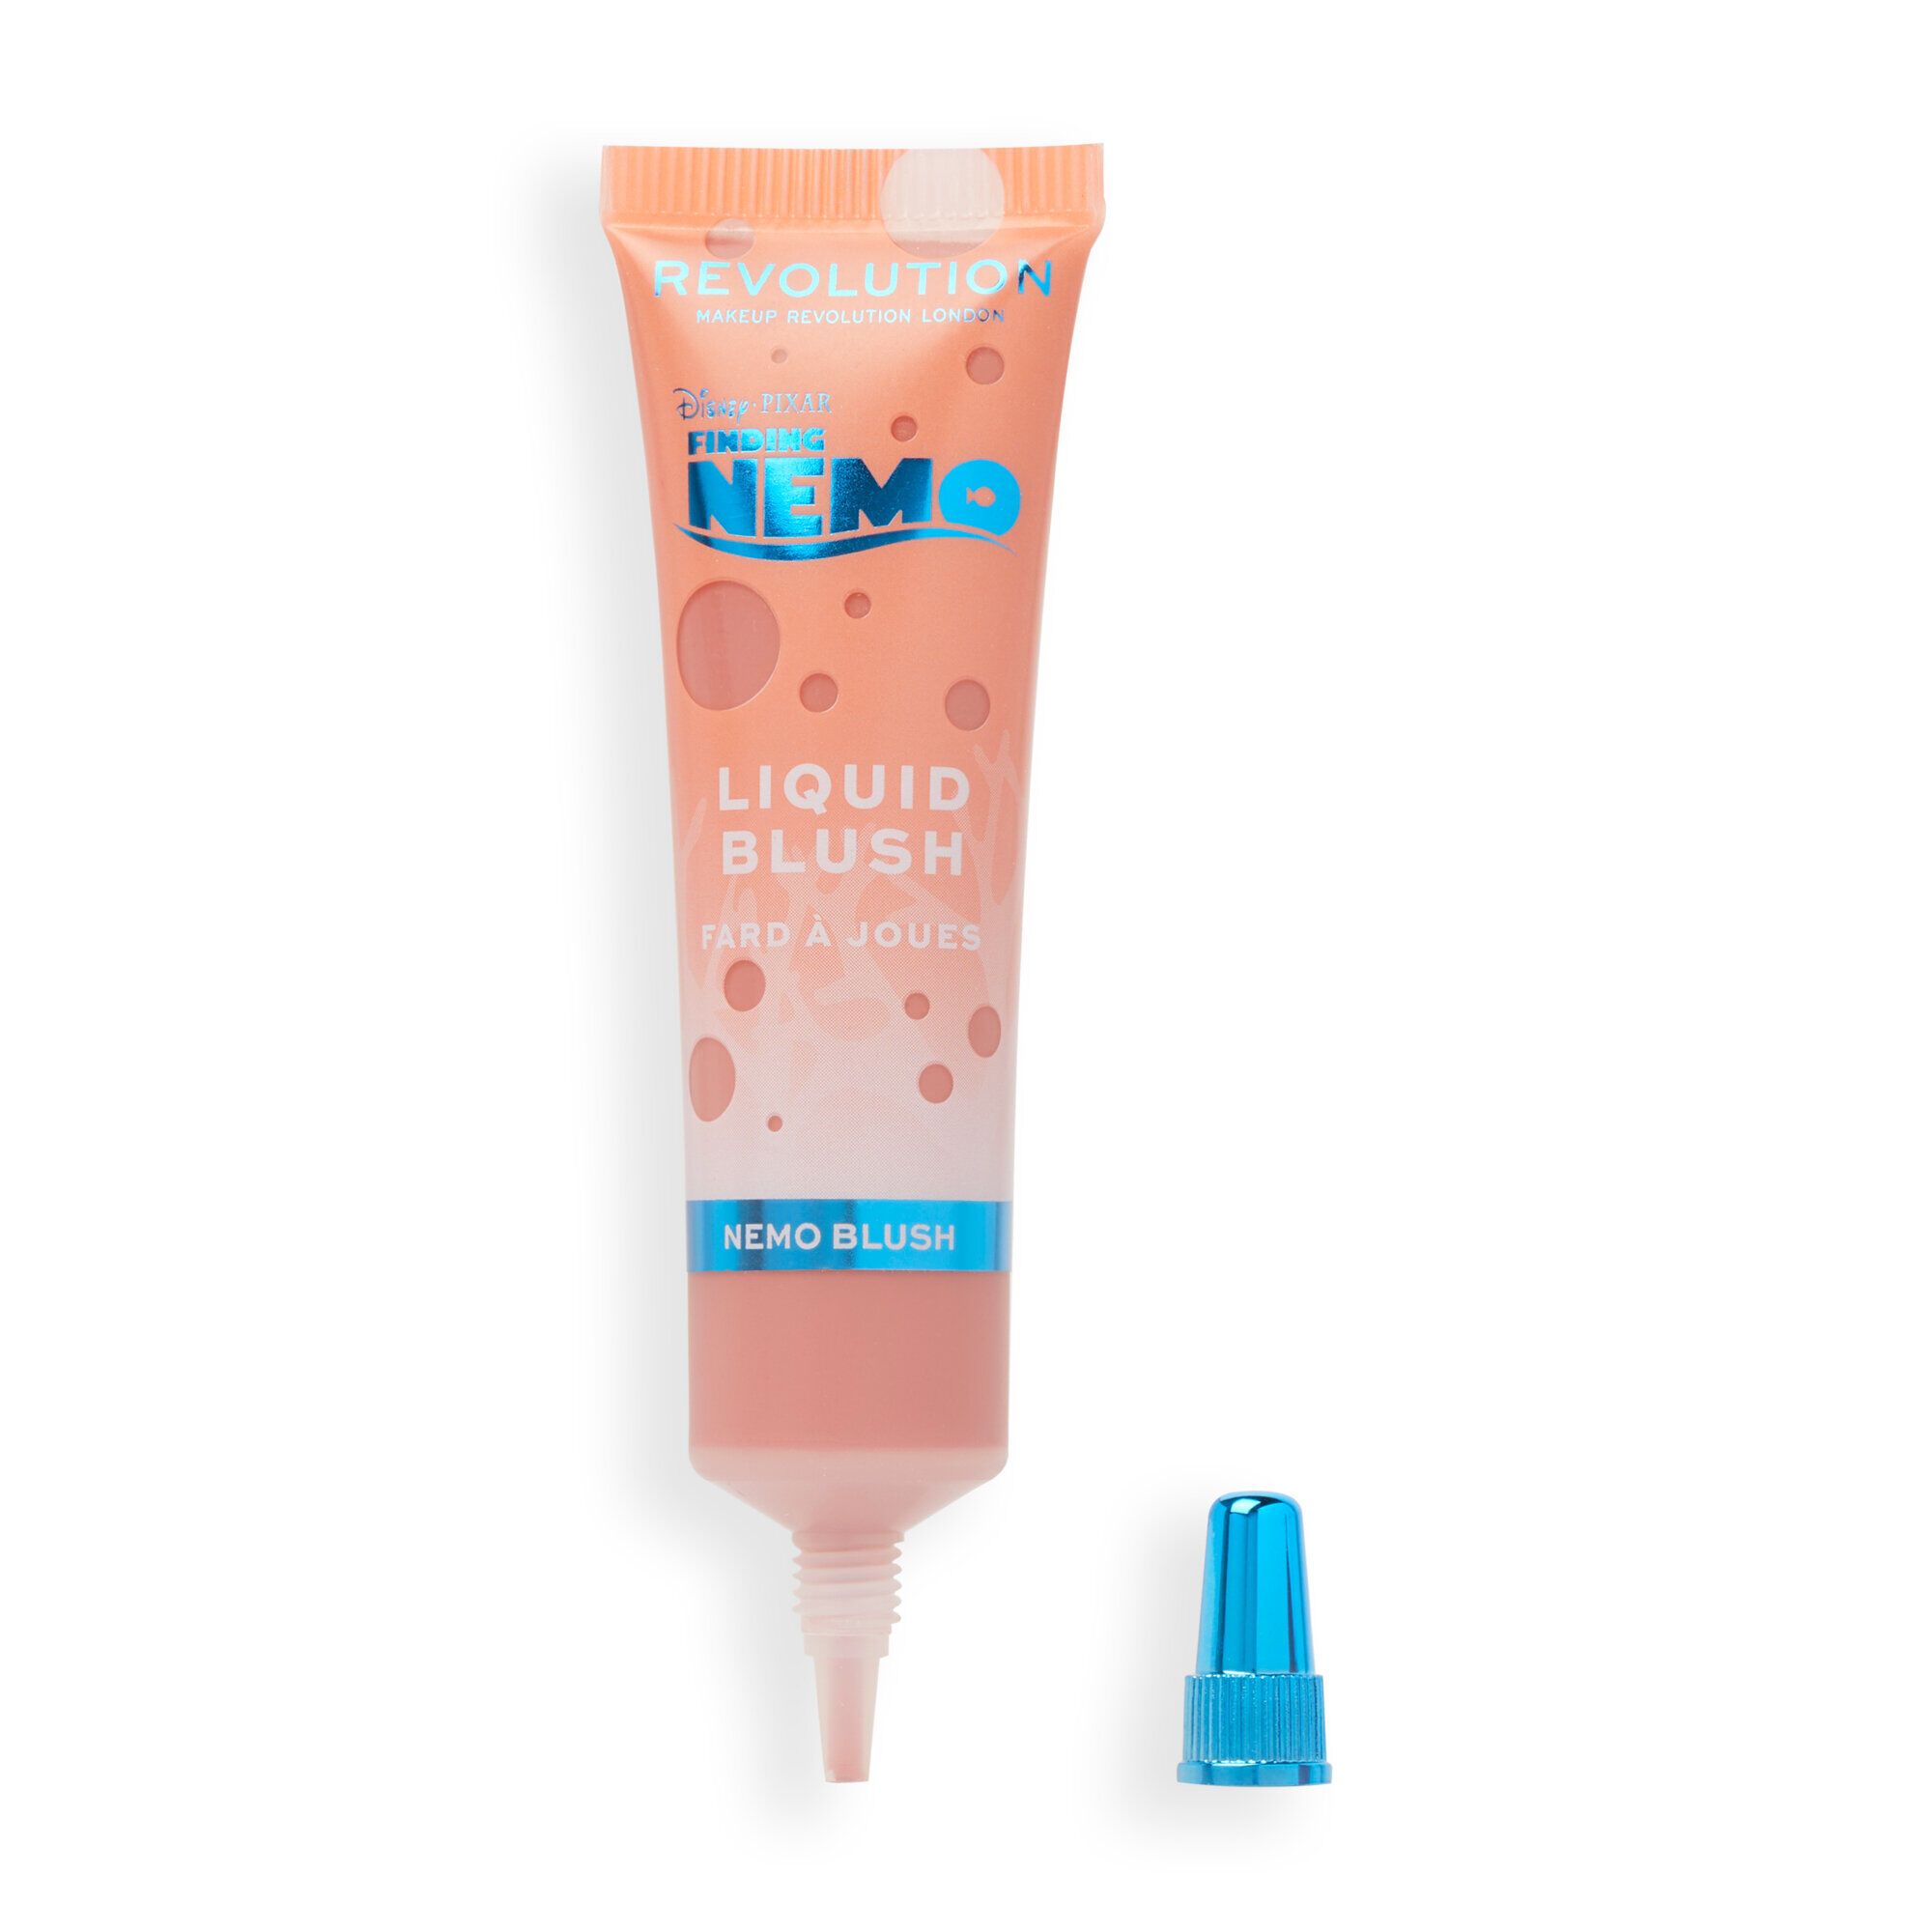 Finding Nemo - Liquid Blush